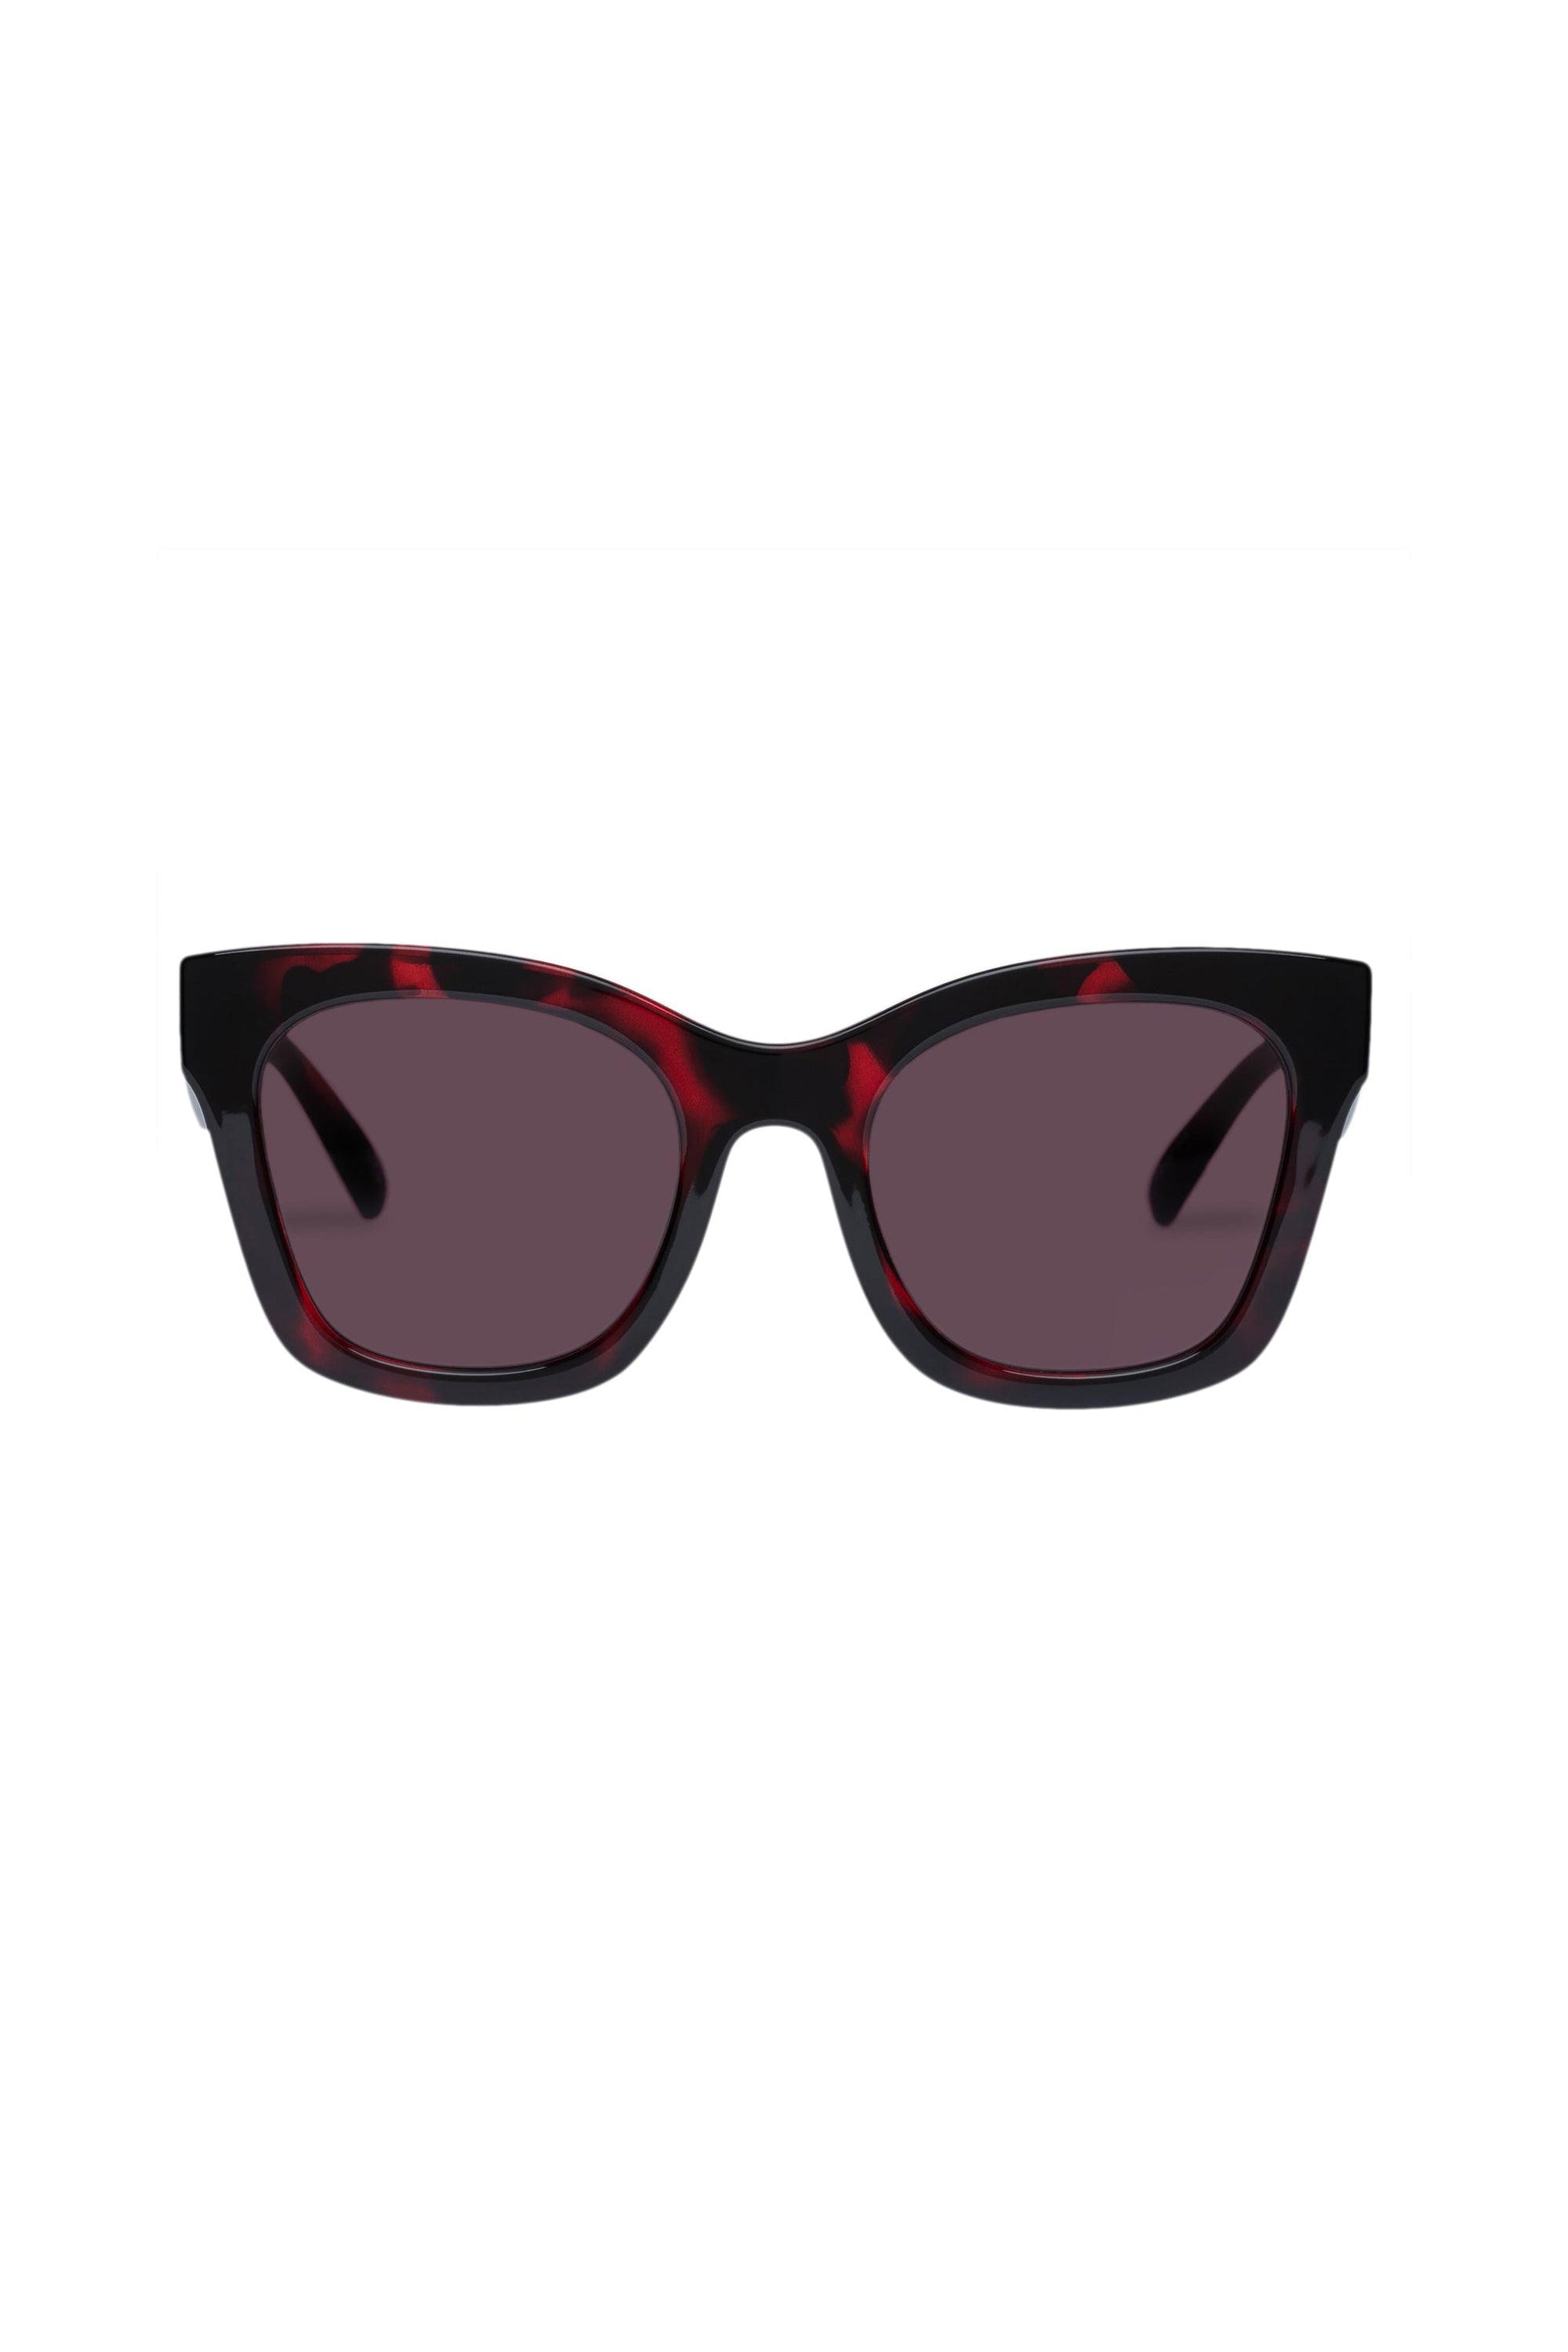 Showstopper Sunglasses - Cherry Tort